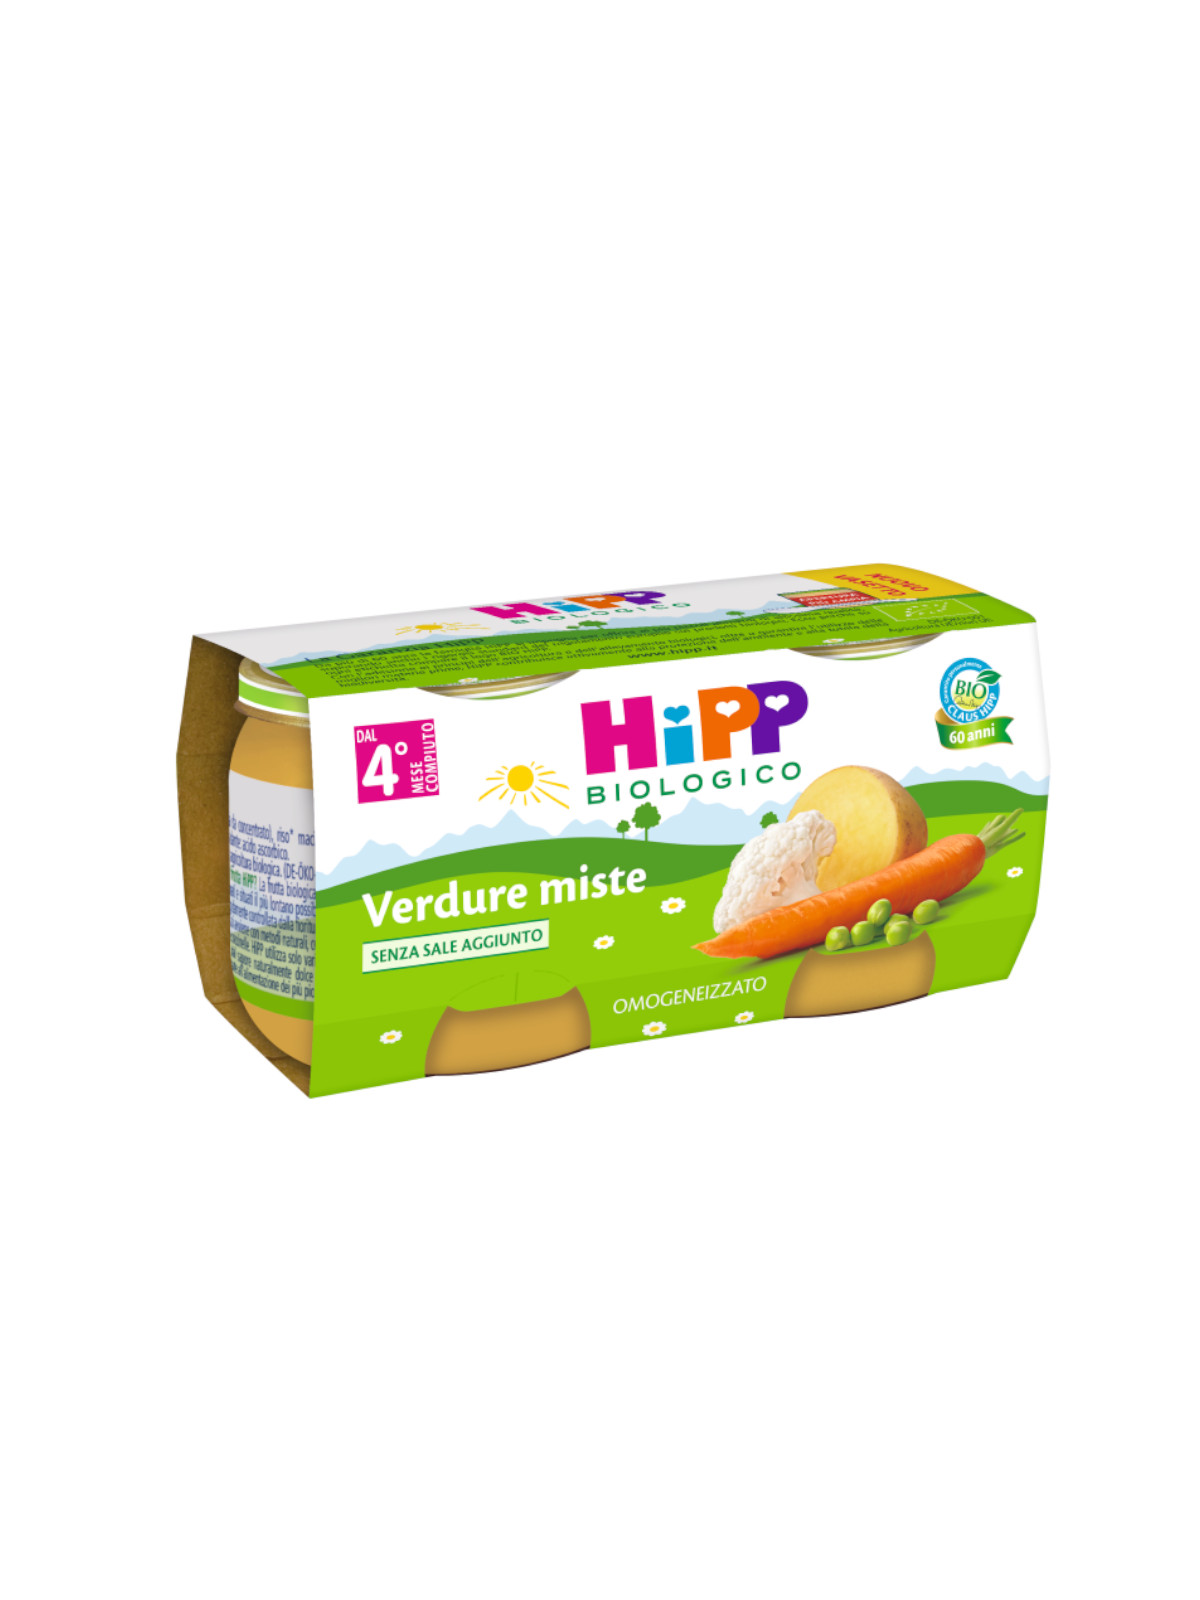 Hipp - omogeneizzato verdure miste 2x80g - Hipp